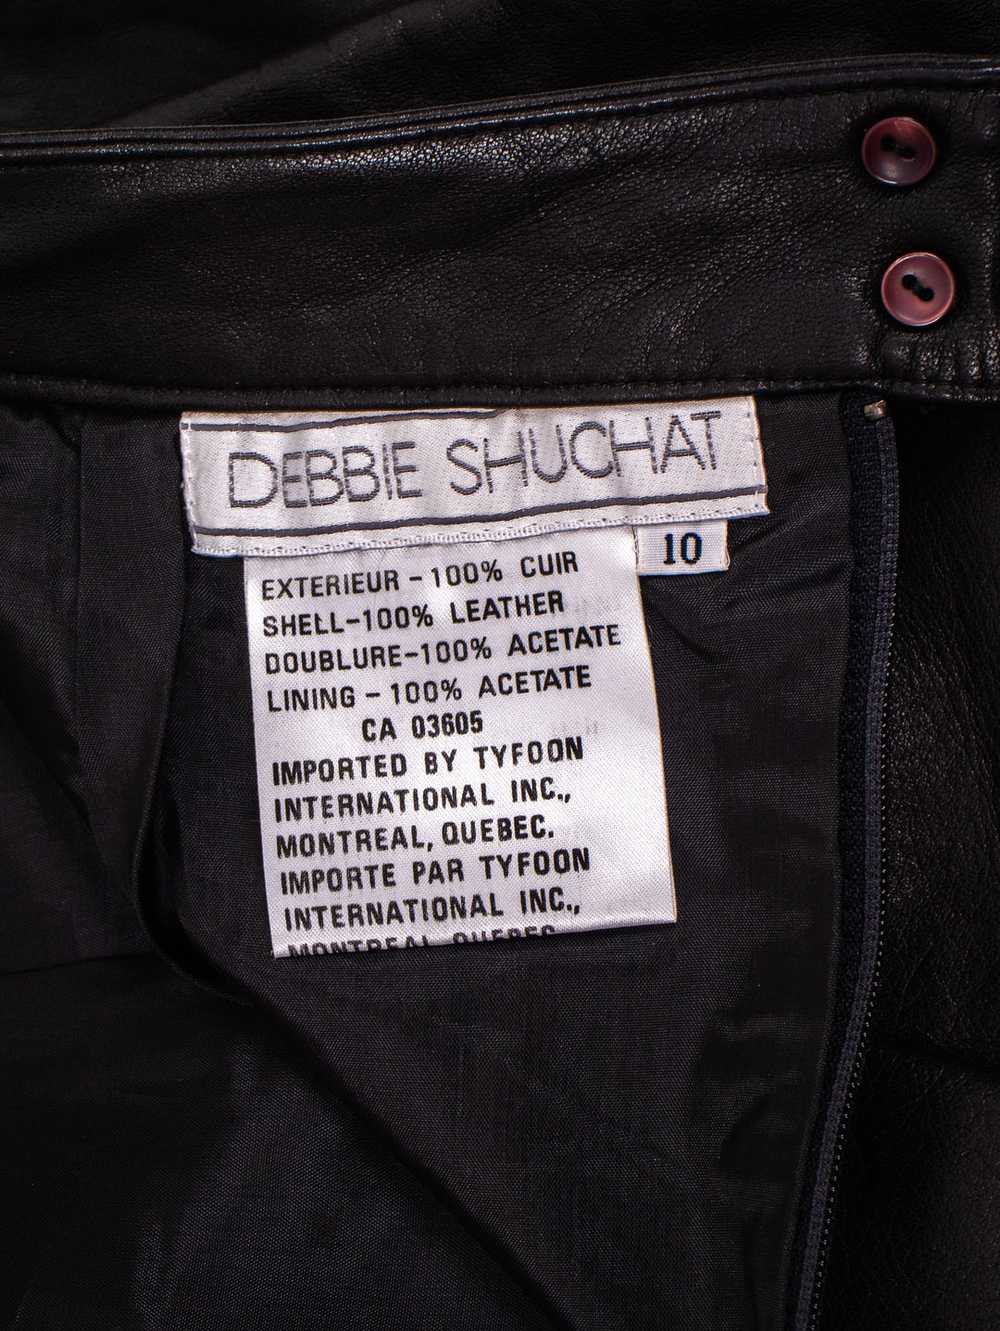 1980's 'debbie schuchat' leather skirt - image 6